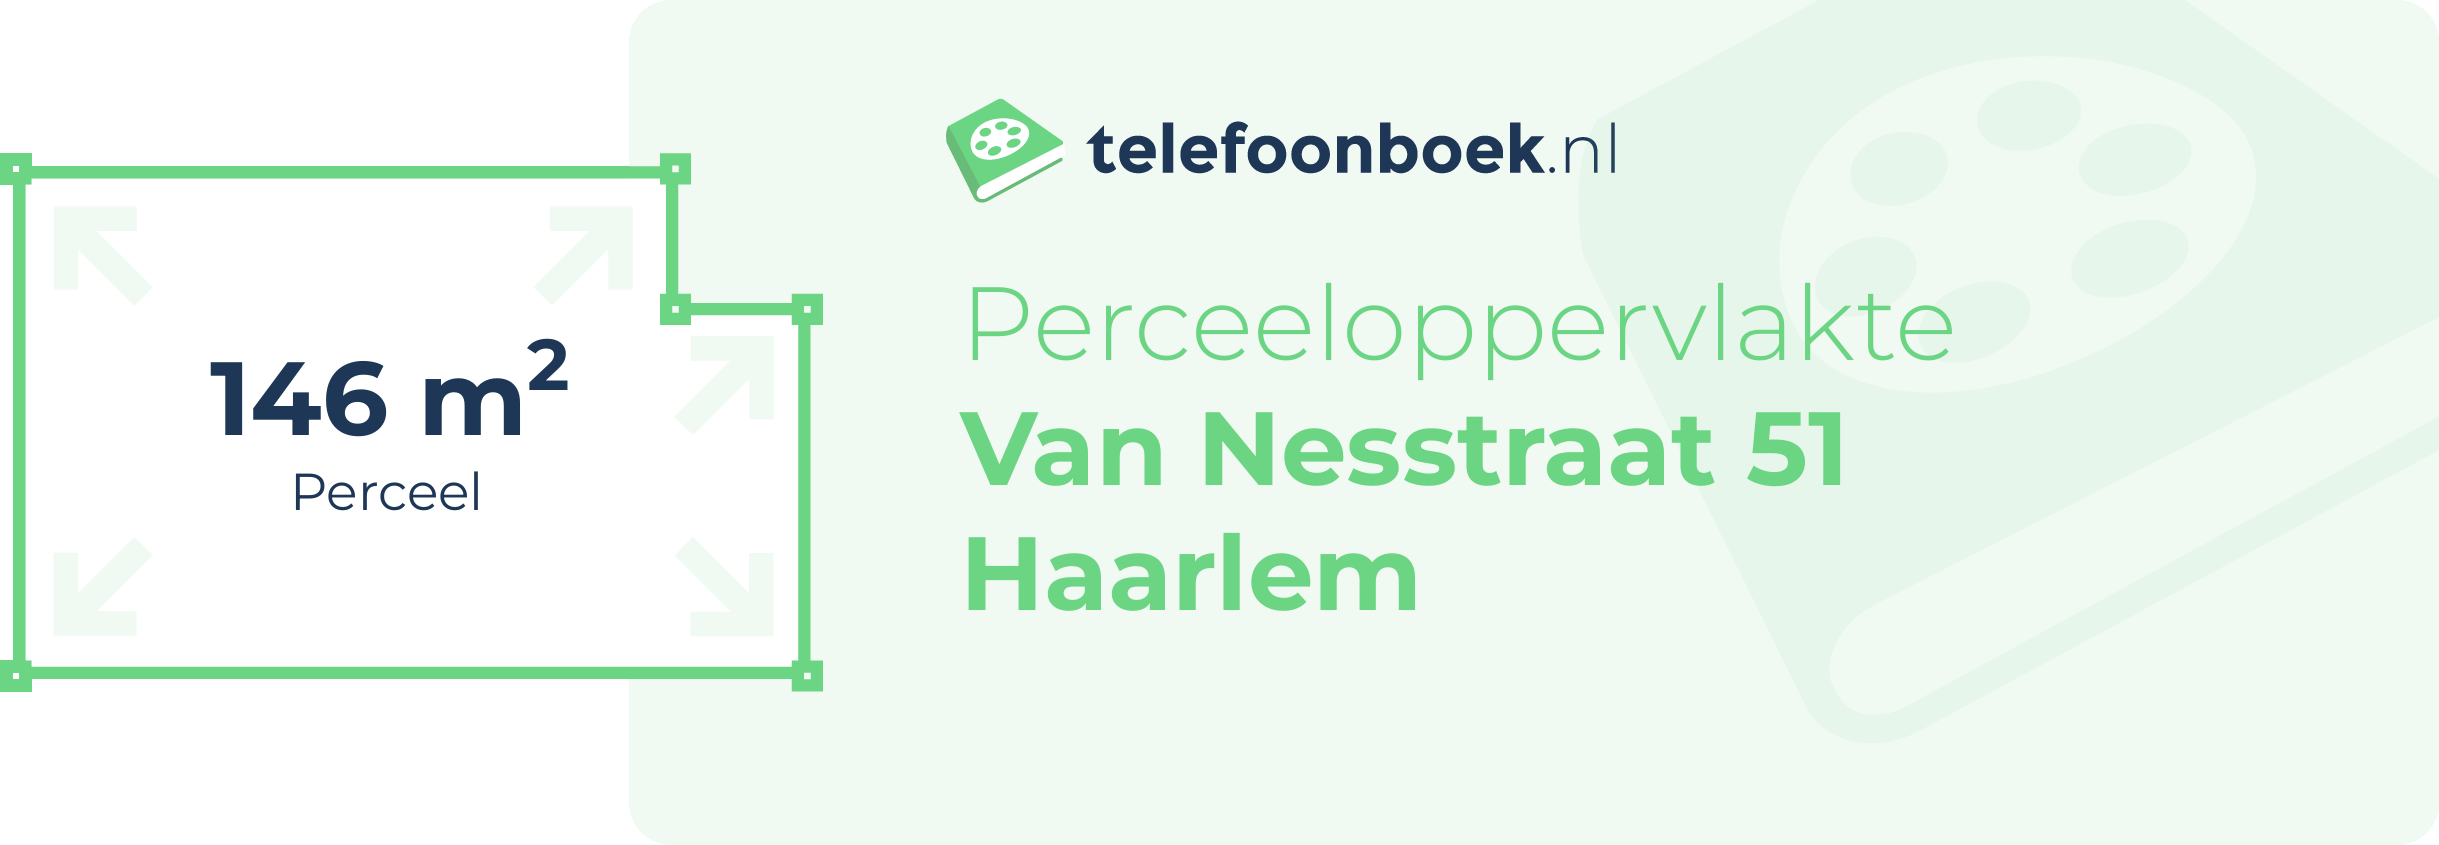 Perceeloppervlakte Van Nesstraat 51 Haarlem